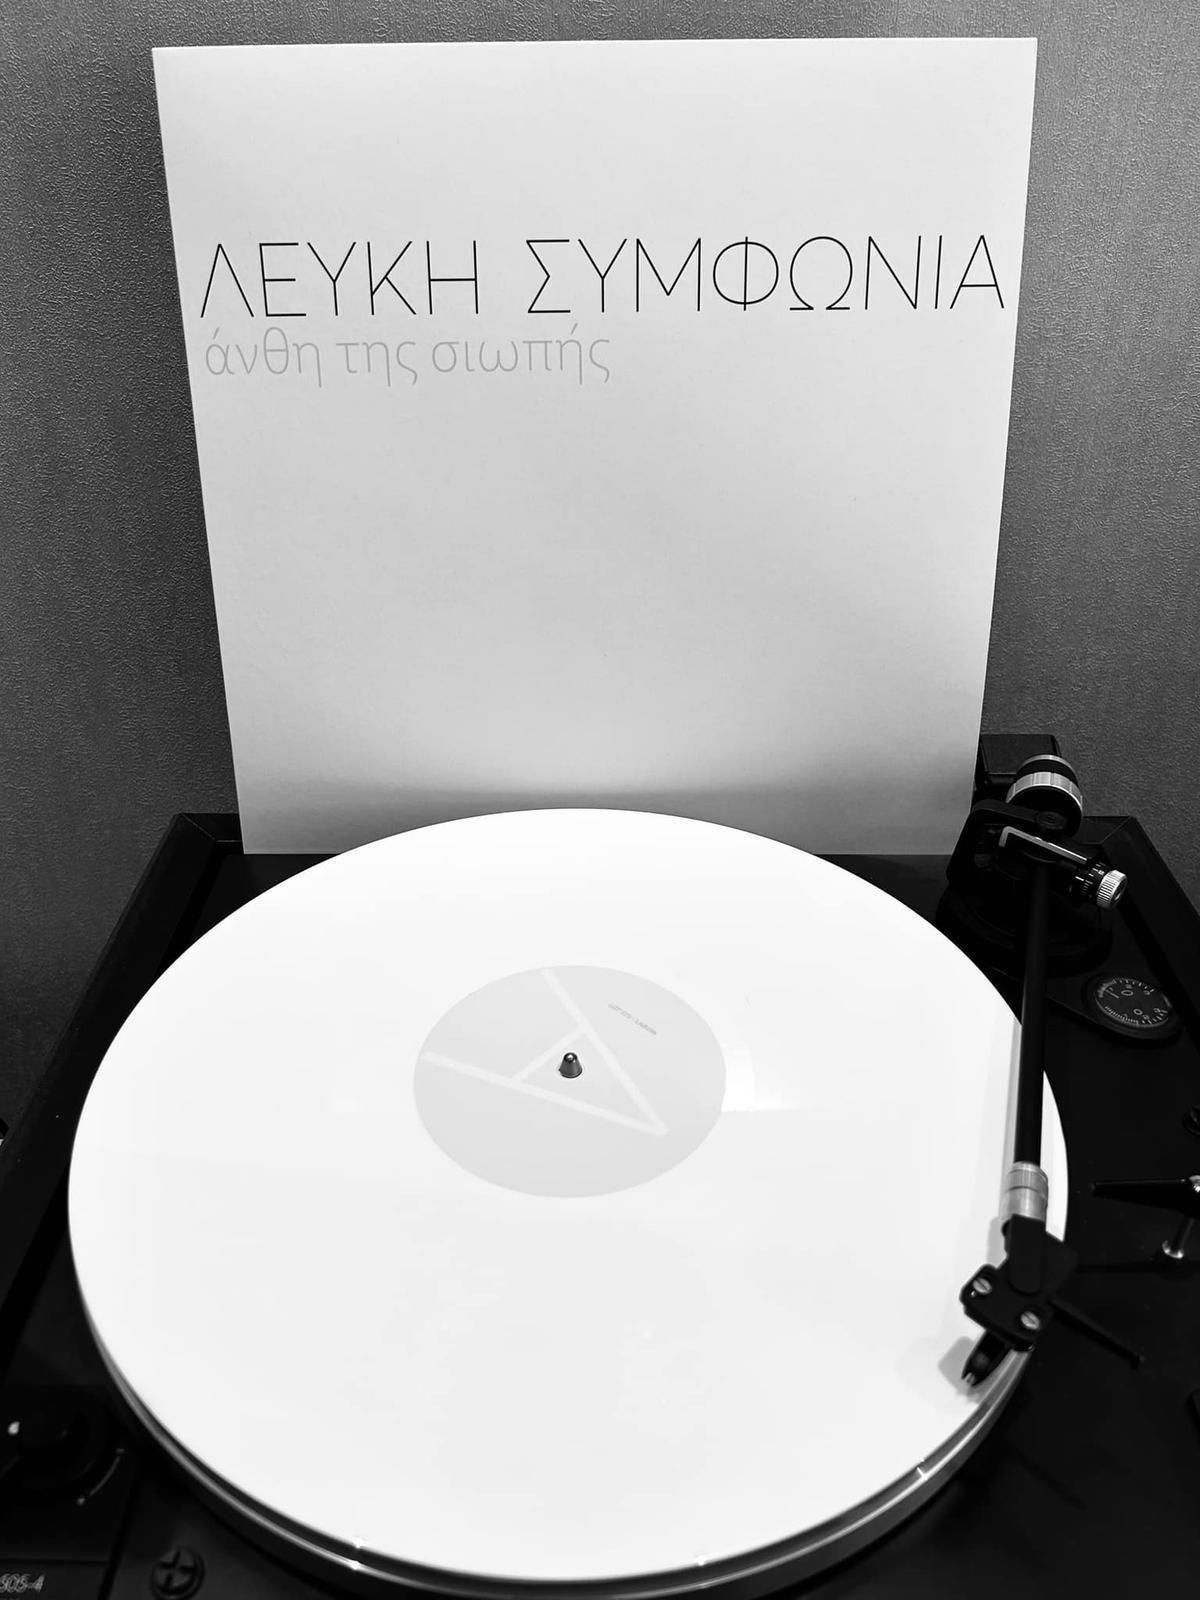 Lefki Symphonia New Album